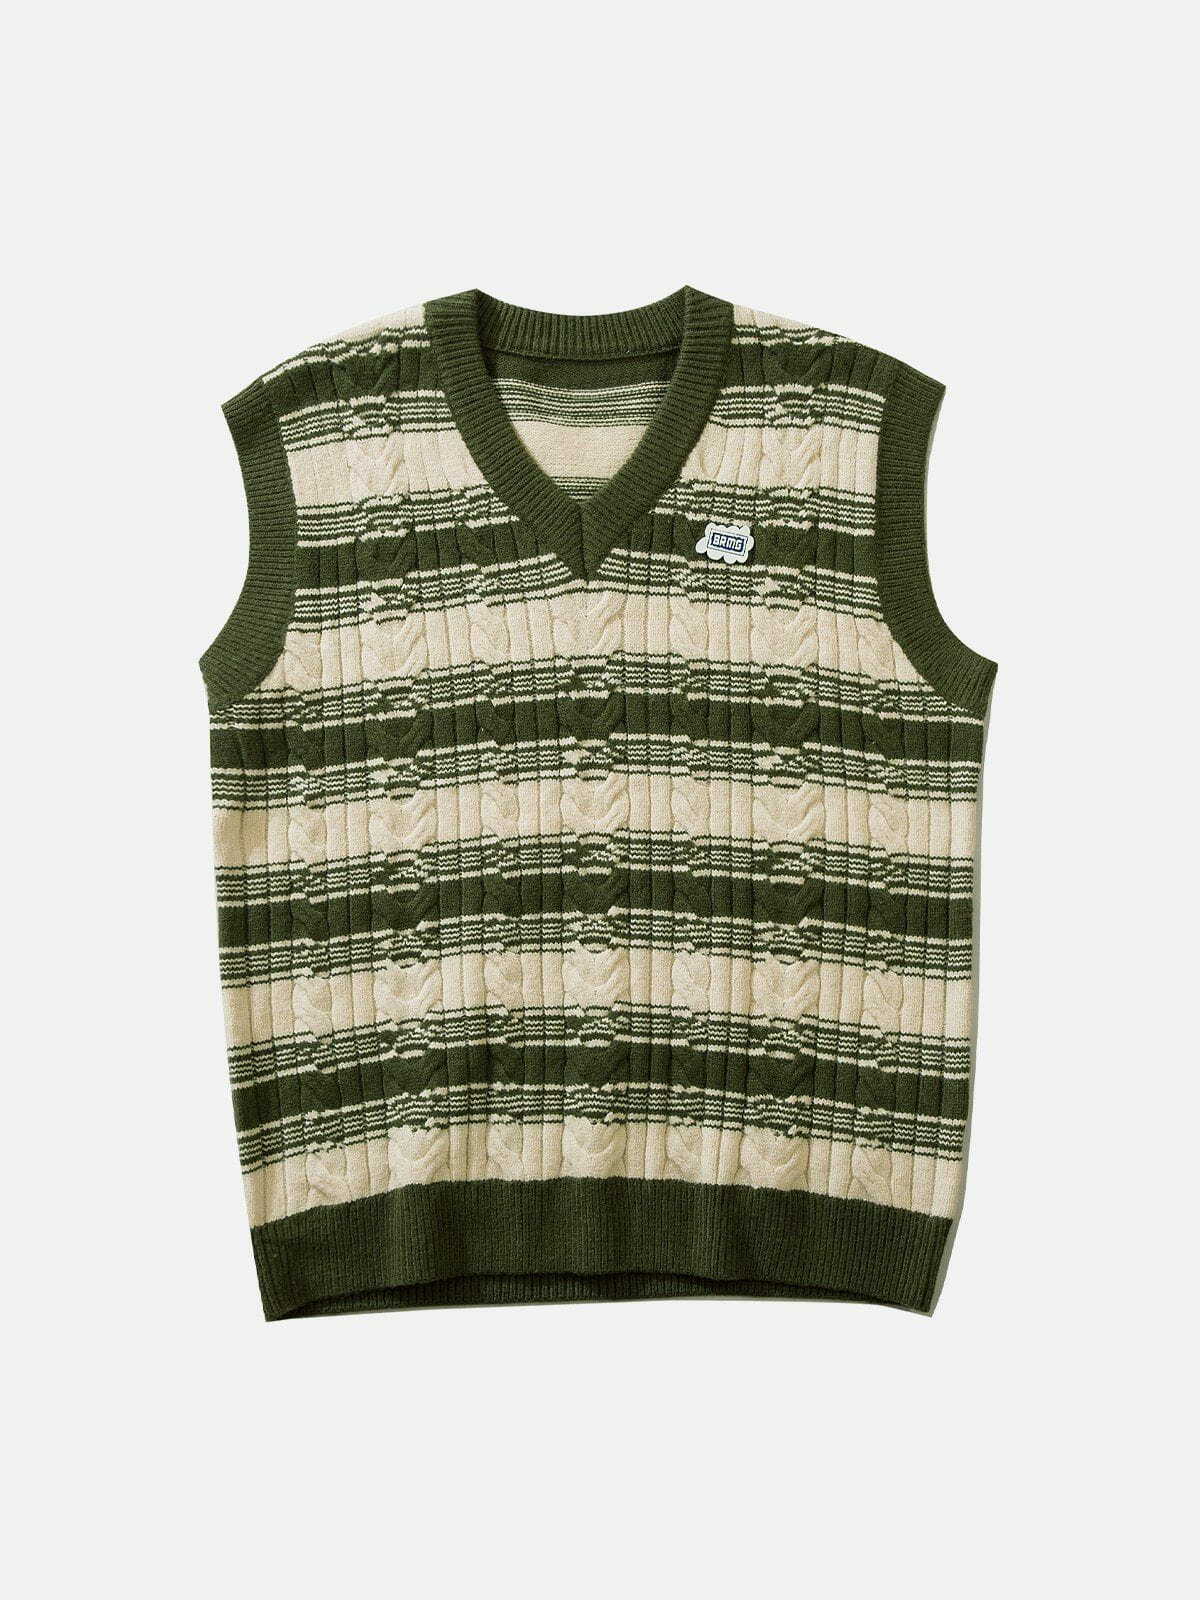 colorblock stripe sweater vest edgy retro statement piece 5947